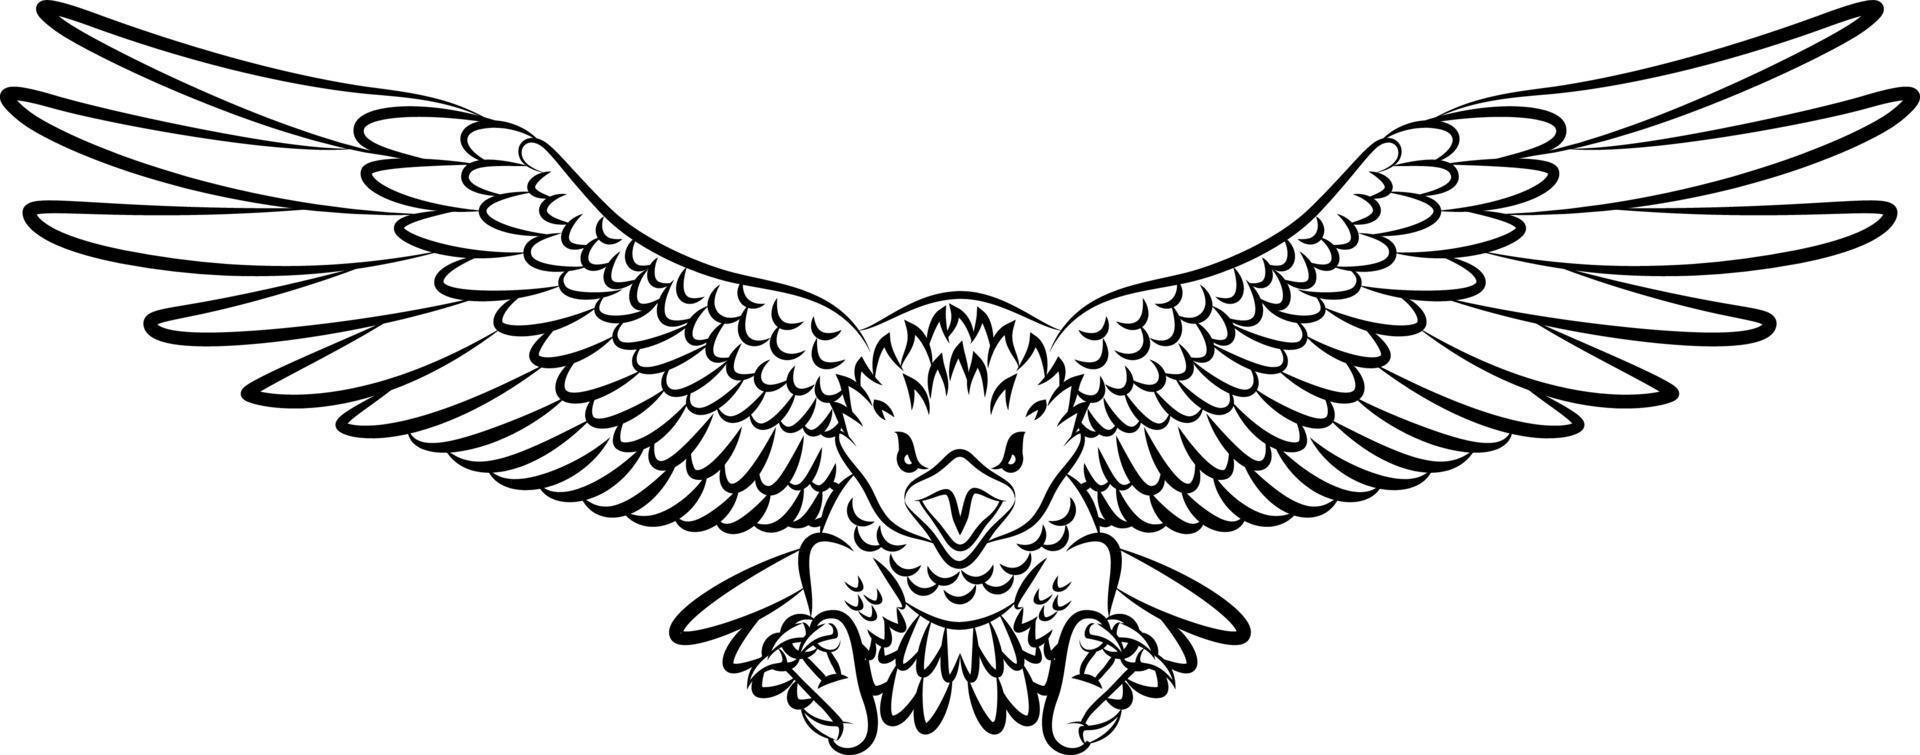 tribal eagle tatuering isolerad på vit bakgrund vektor